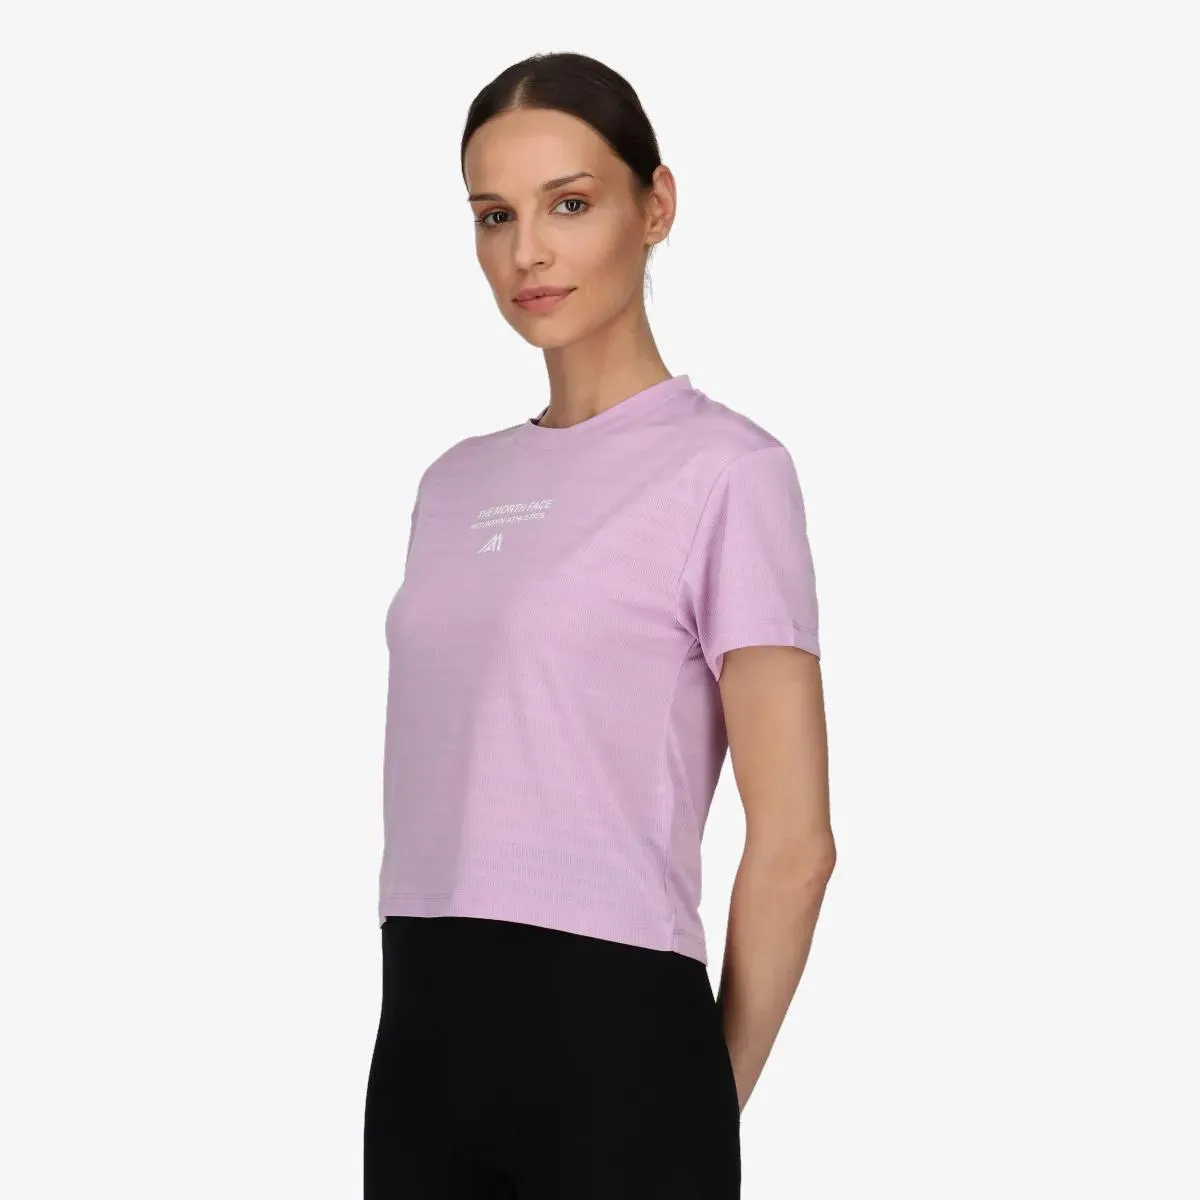 The North Face T-shirt Women’s Ma S/S Tee - Eu 